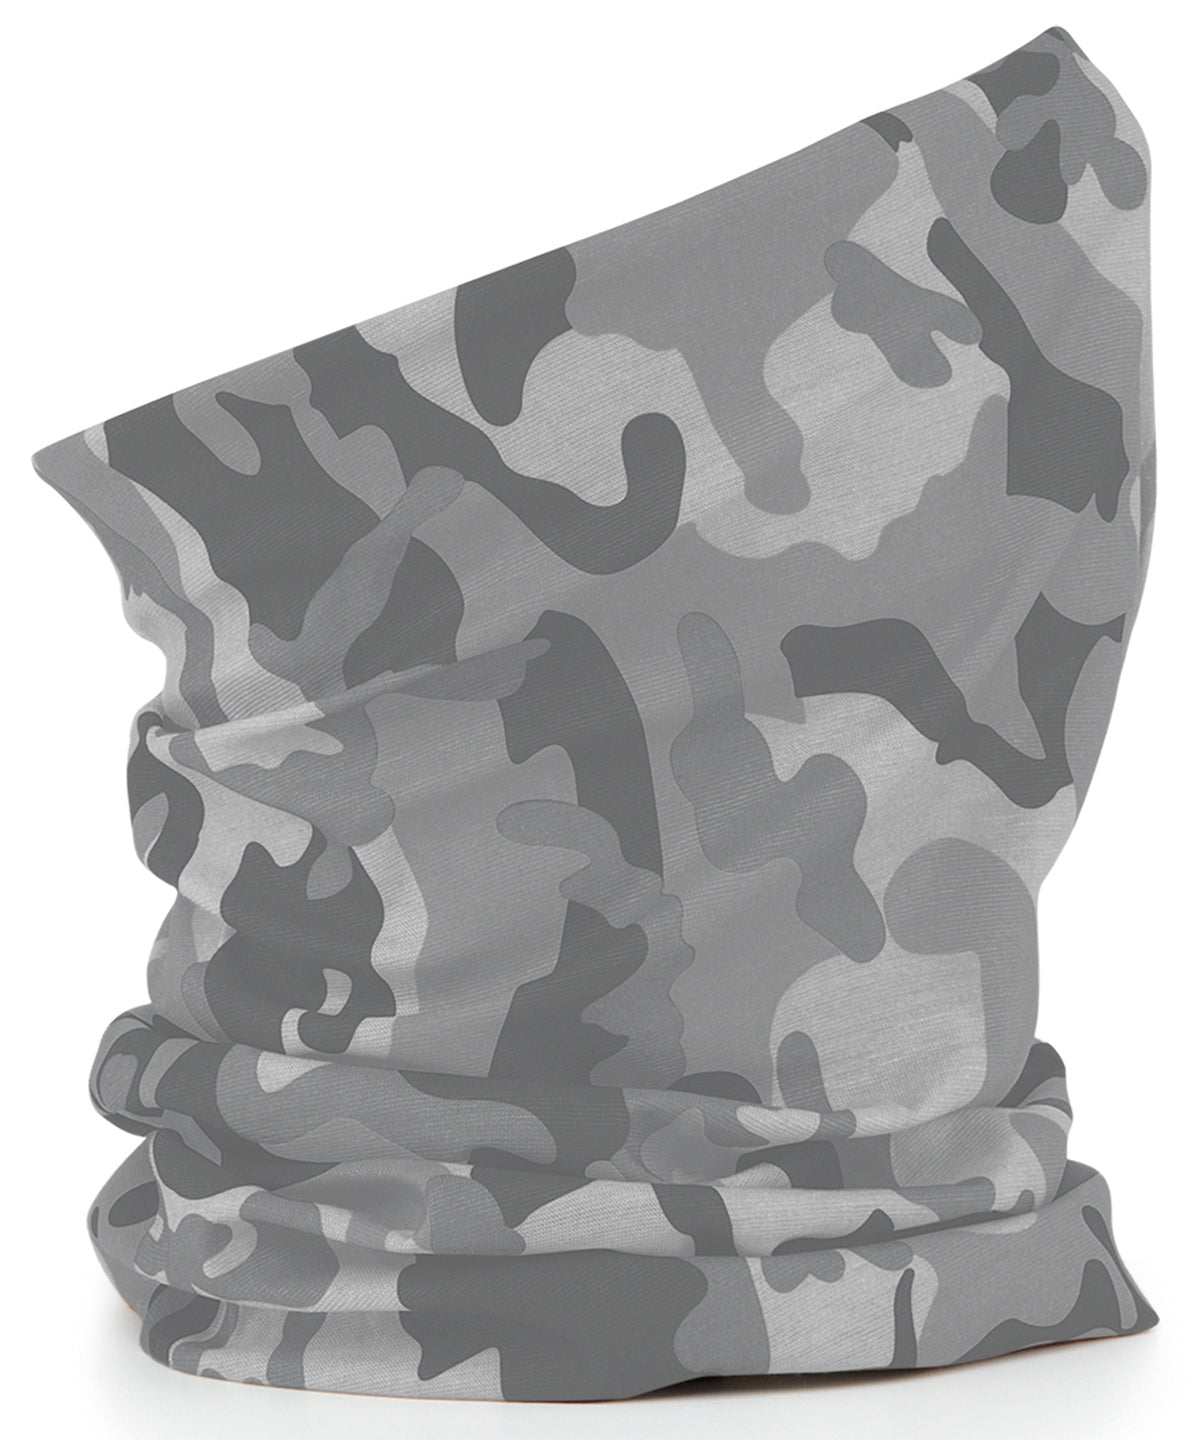 Personalised Snoods - Camouflage Beechfield Morf® original